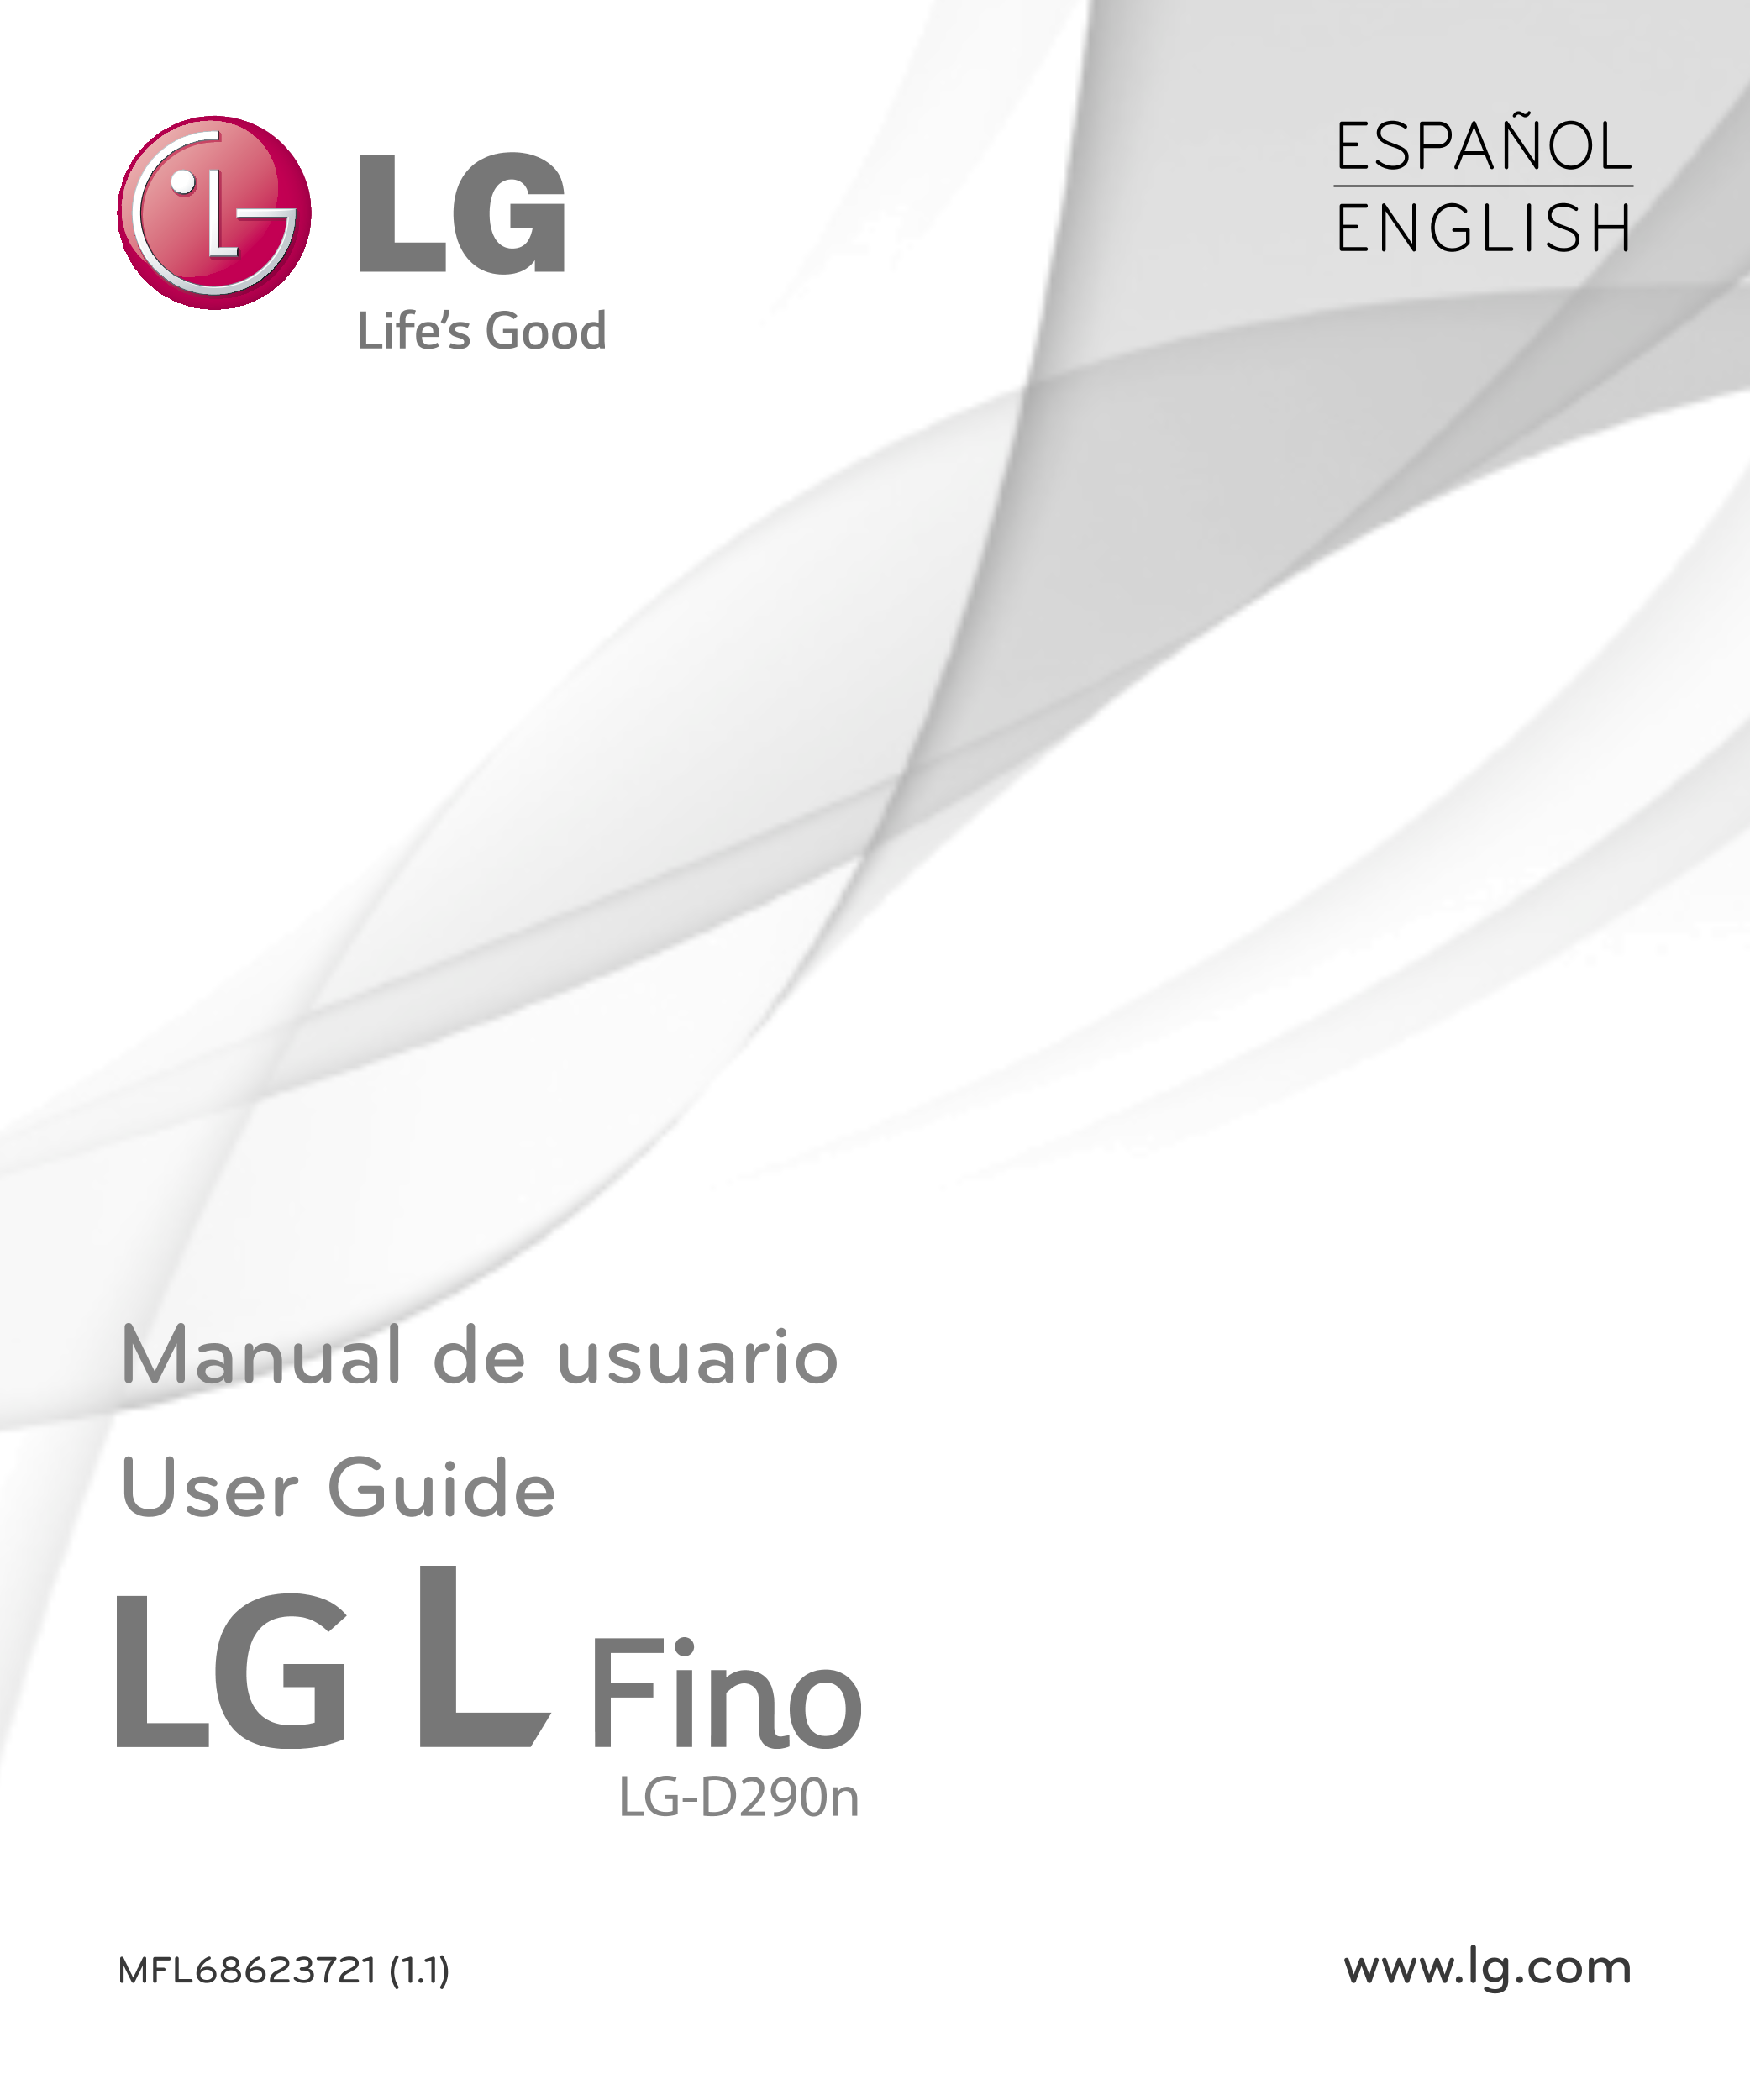 ESPAÑOL
ENGLISH
Manual de usuario
User Guide
LG-D290n
MFL68623721 (1.1) www.lg.com